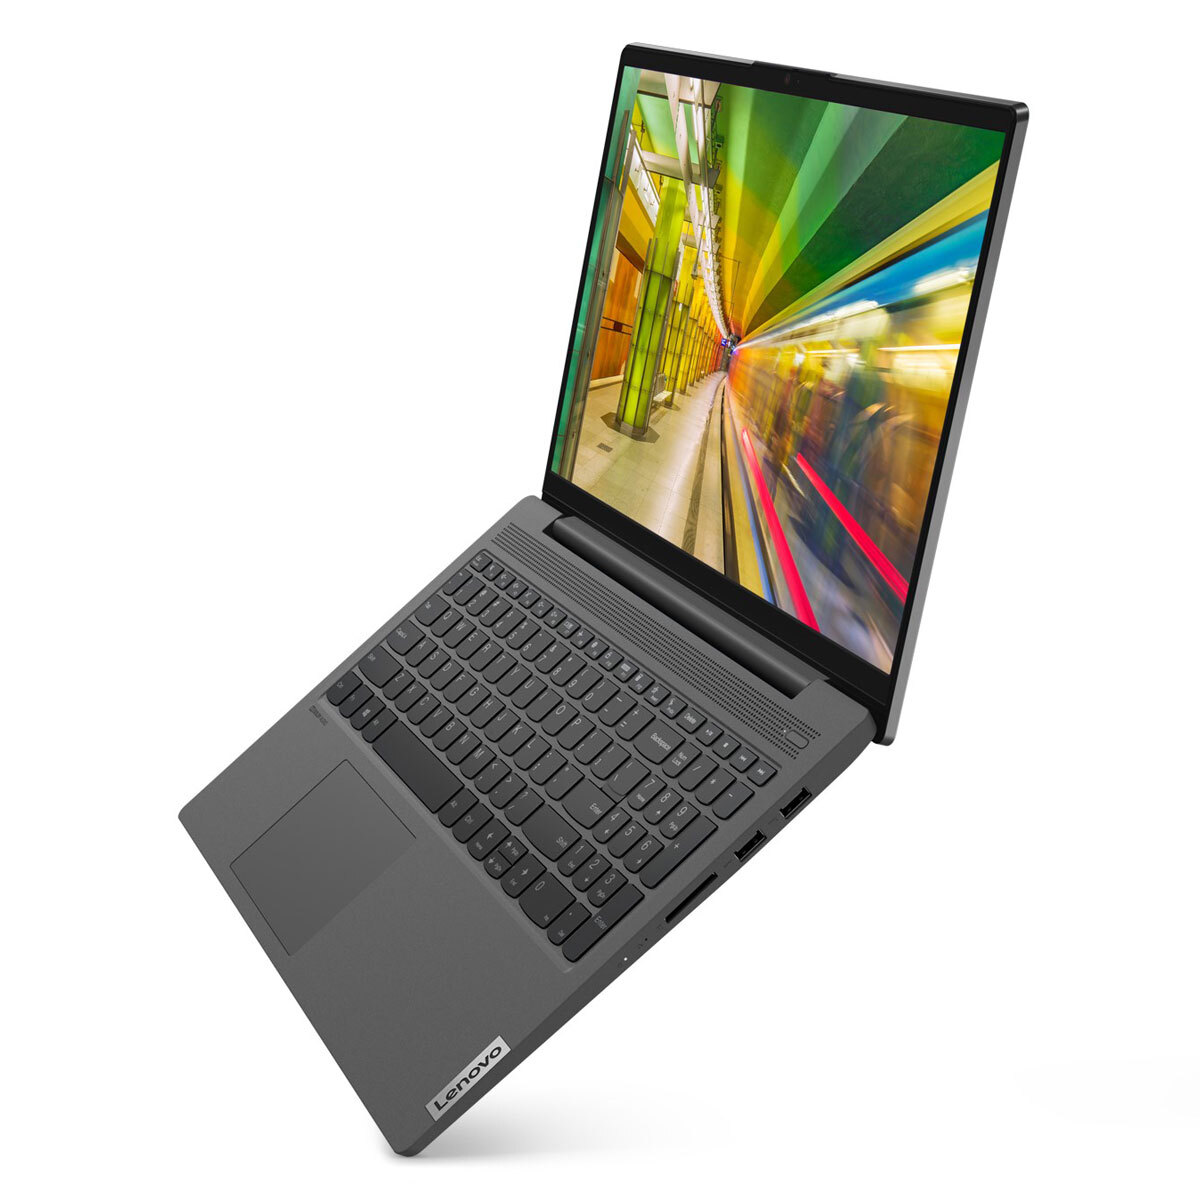 Buy Lenovo Ideapad S500, Intel Core i7, 8GB RAM, 512GB SSD, 15.6 inch Laptop, 82FG00X5UK at Costco.co.uk